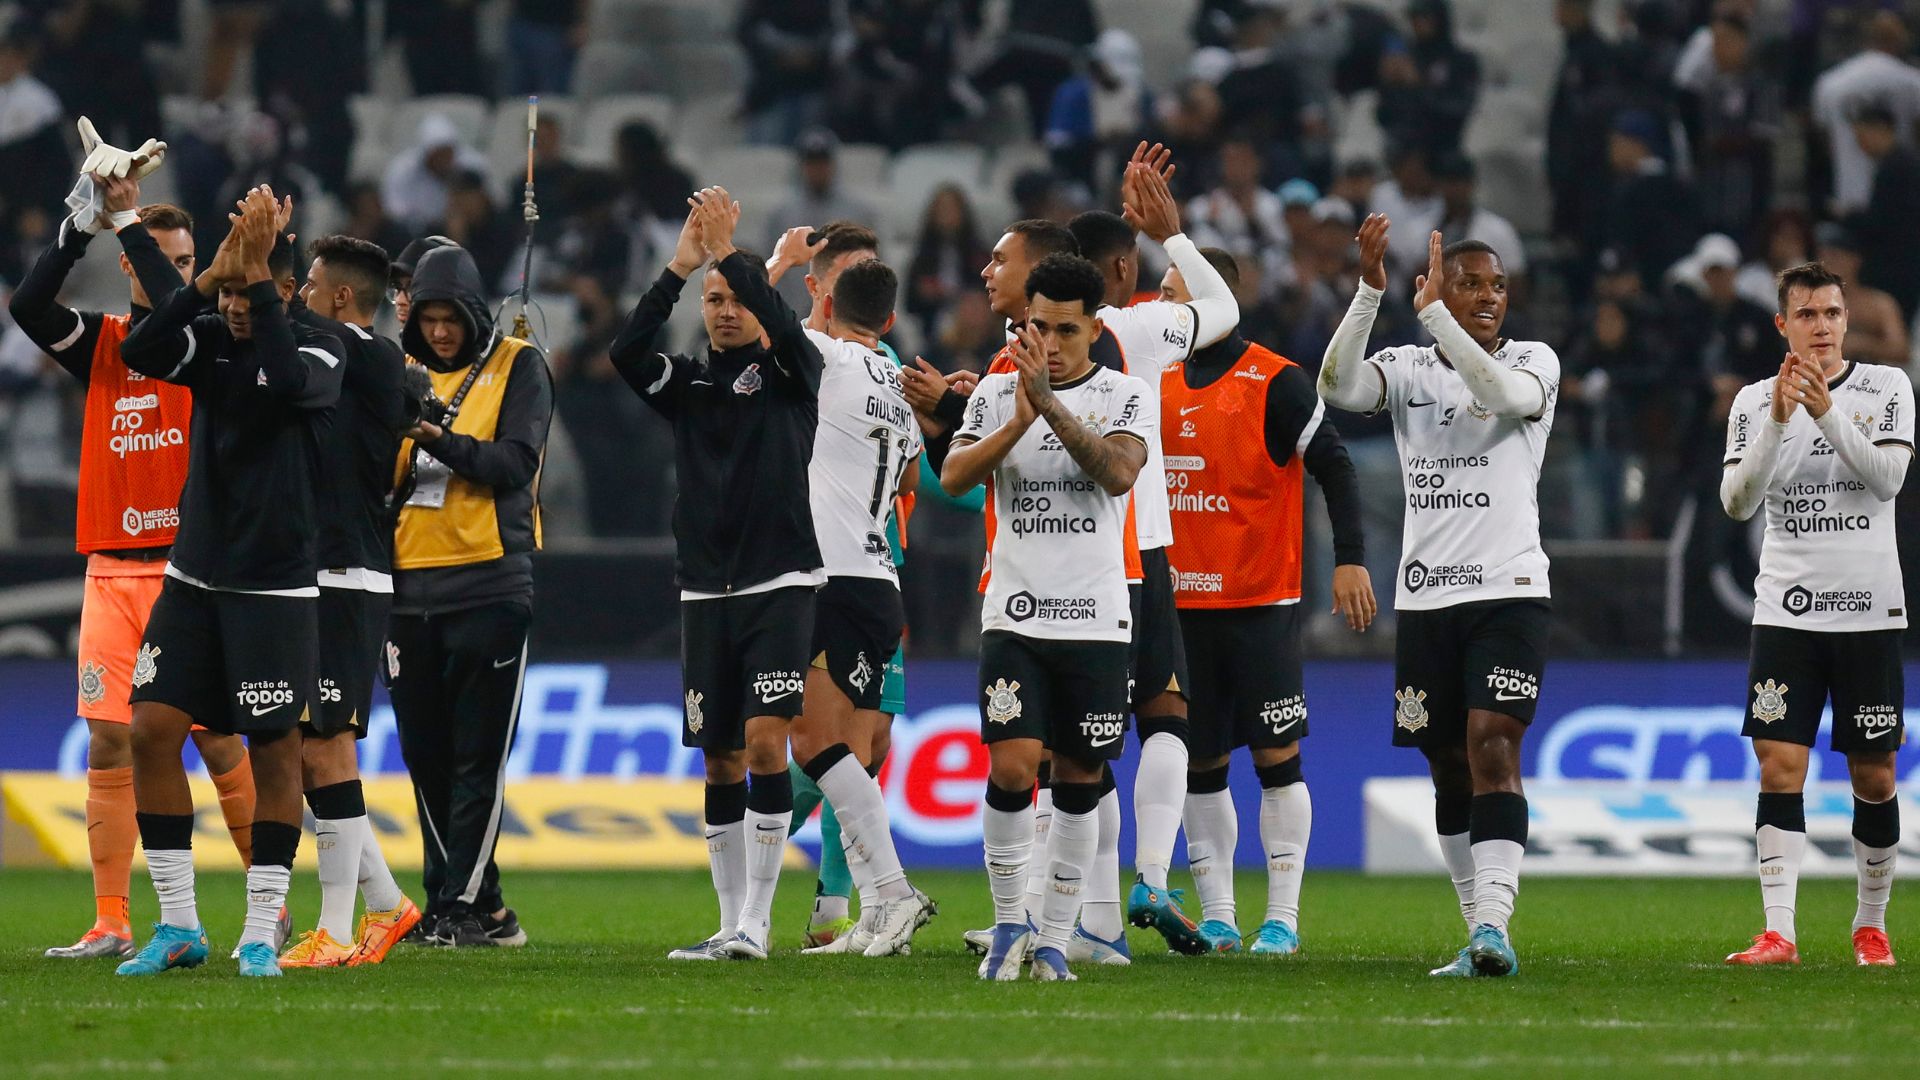 Jogadores do Corinthians agradecem apoio da torcida